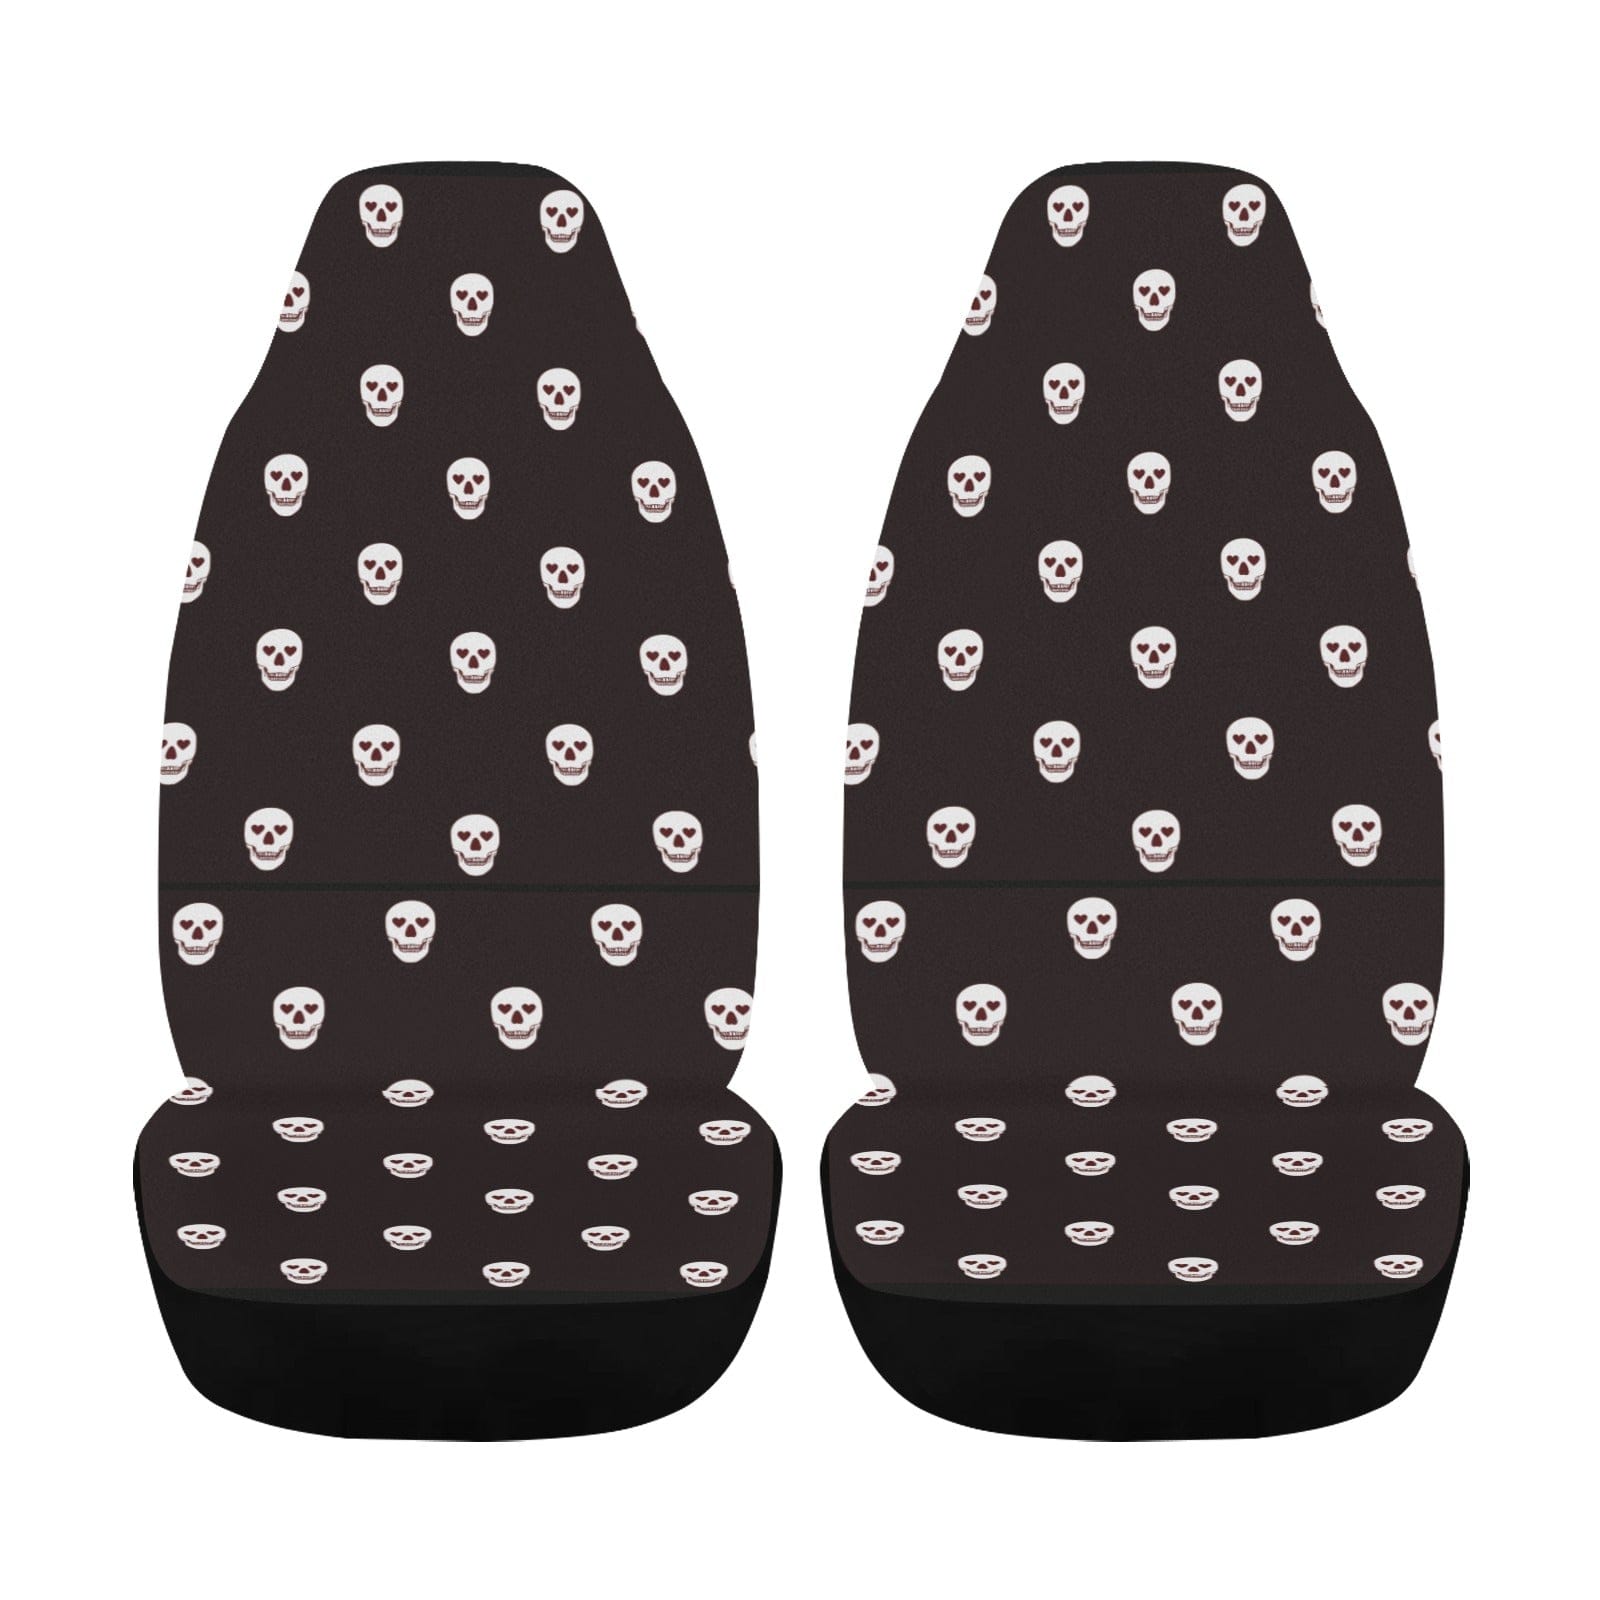 Black Skulls Car Seat Cover Airbag Compatible Set of 2